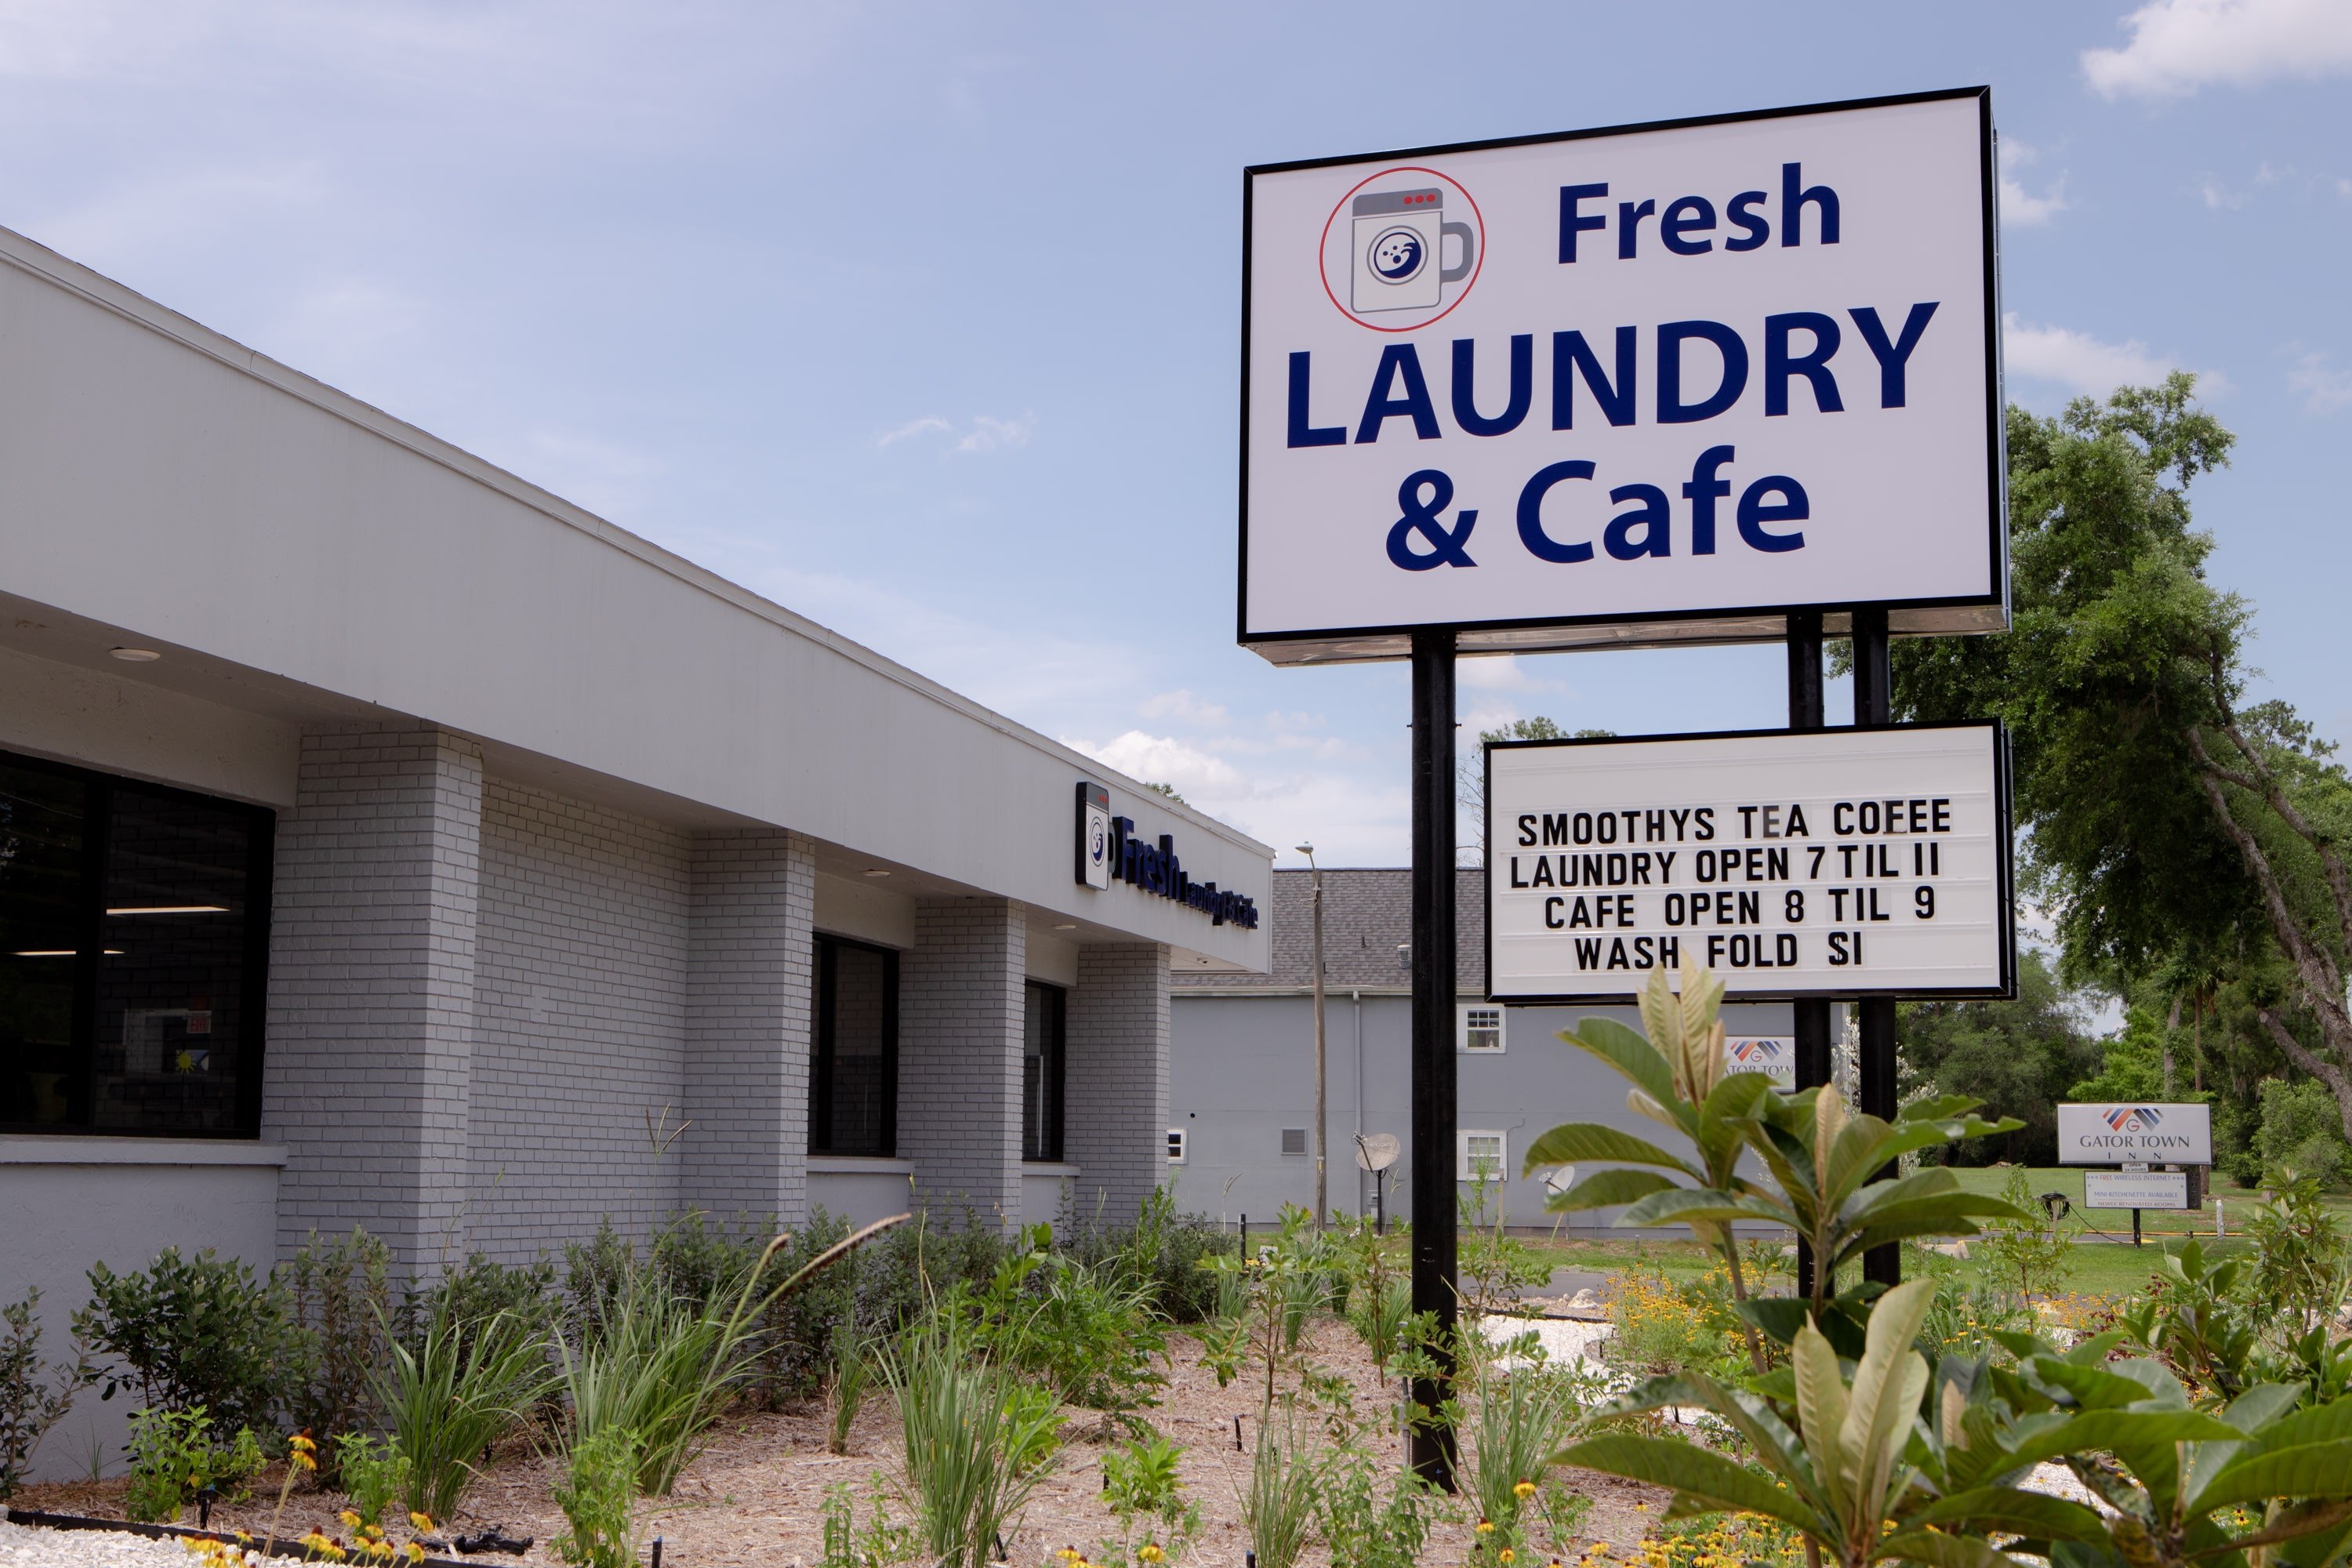 10 Ways to Improve Laundromat Services - Jordan Berry's 2 Cents